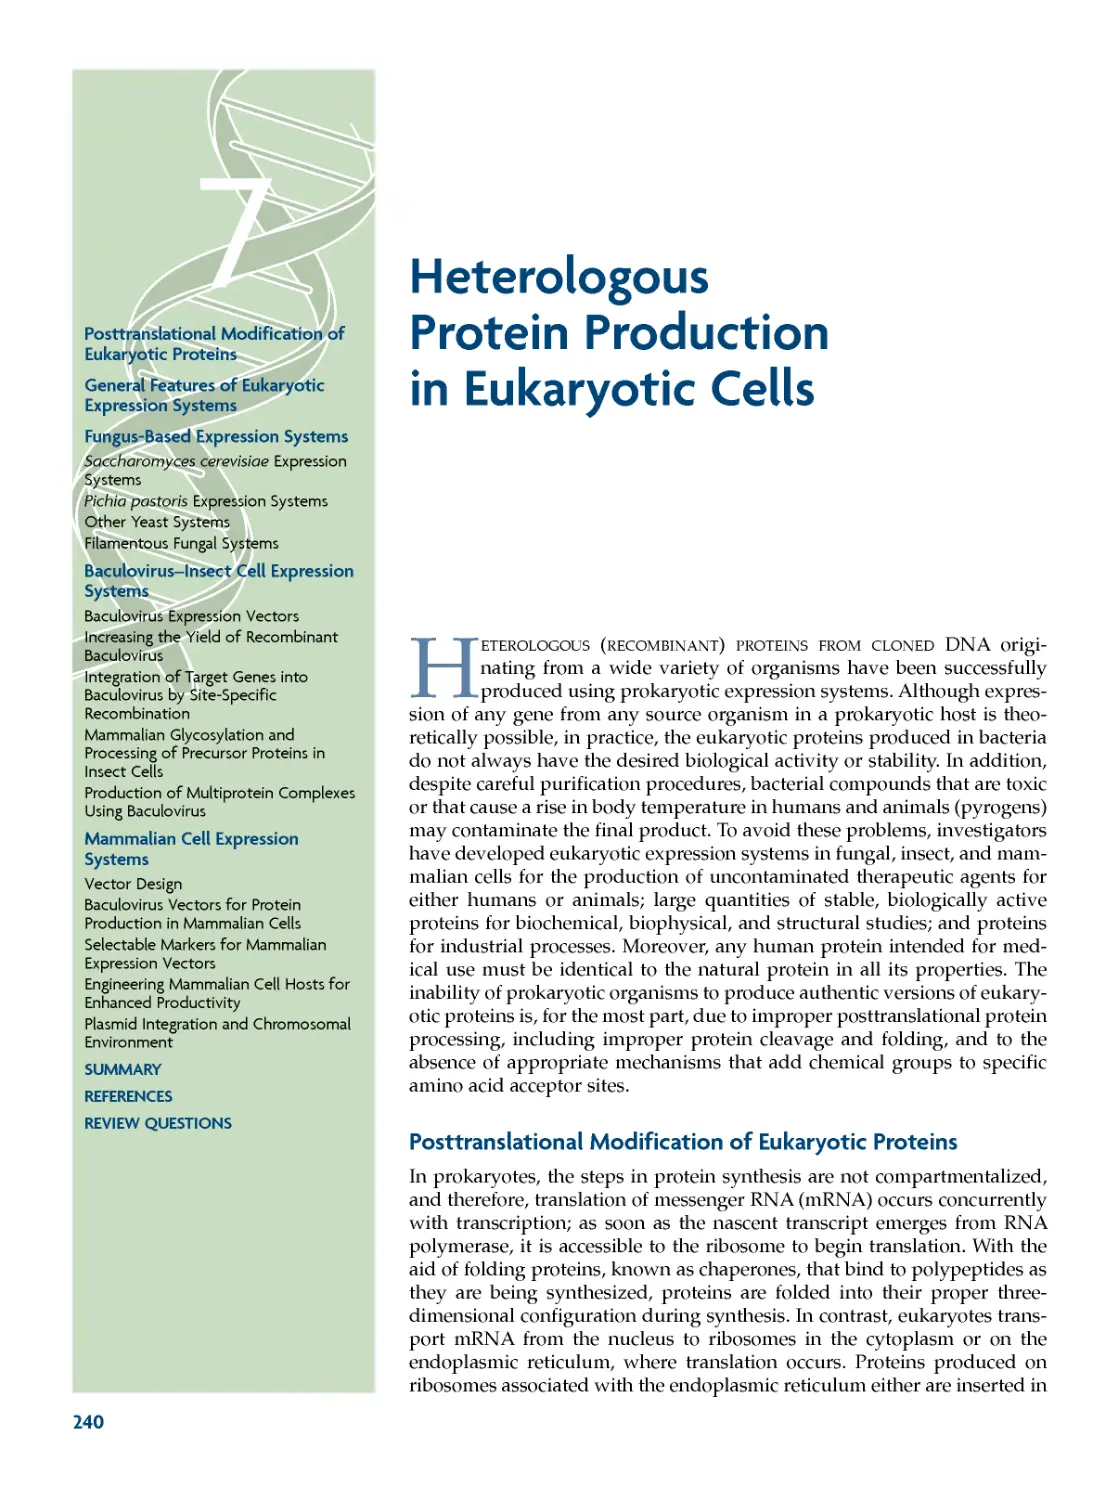 Chapter 7 Heterologous Protein Production in Eukaryotic Cells